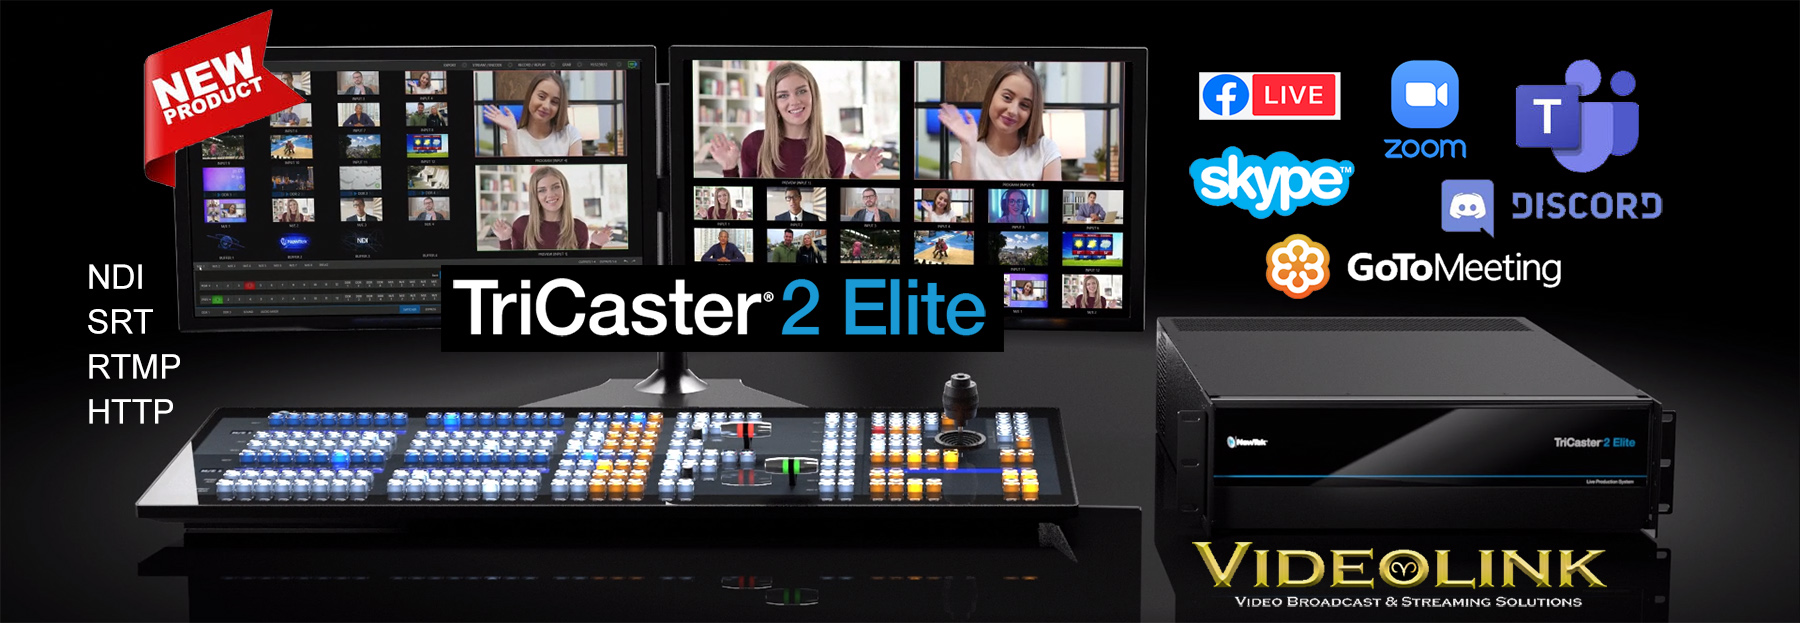 Videolink NewTek TriCaster NewTek Elite Partner Live Streaming Systems Video Broadcast Production Equipment Canada